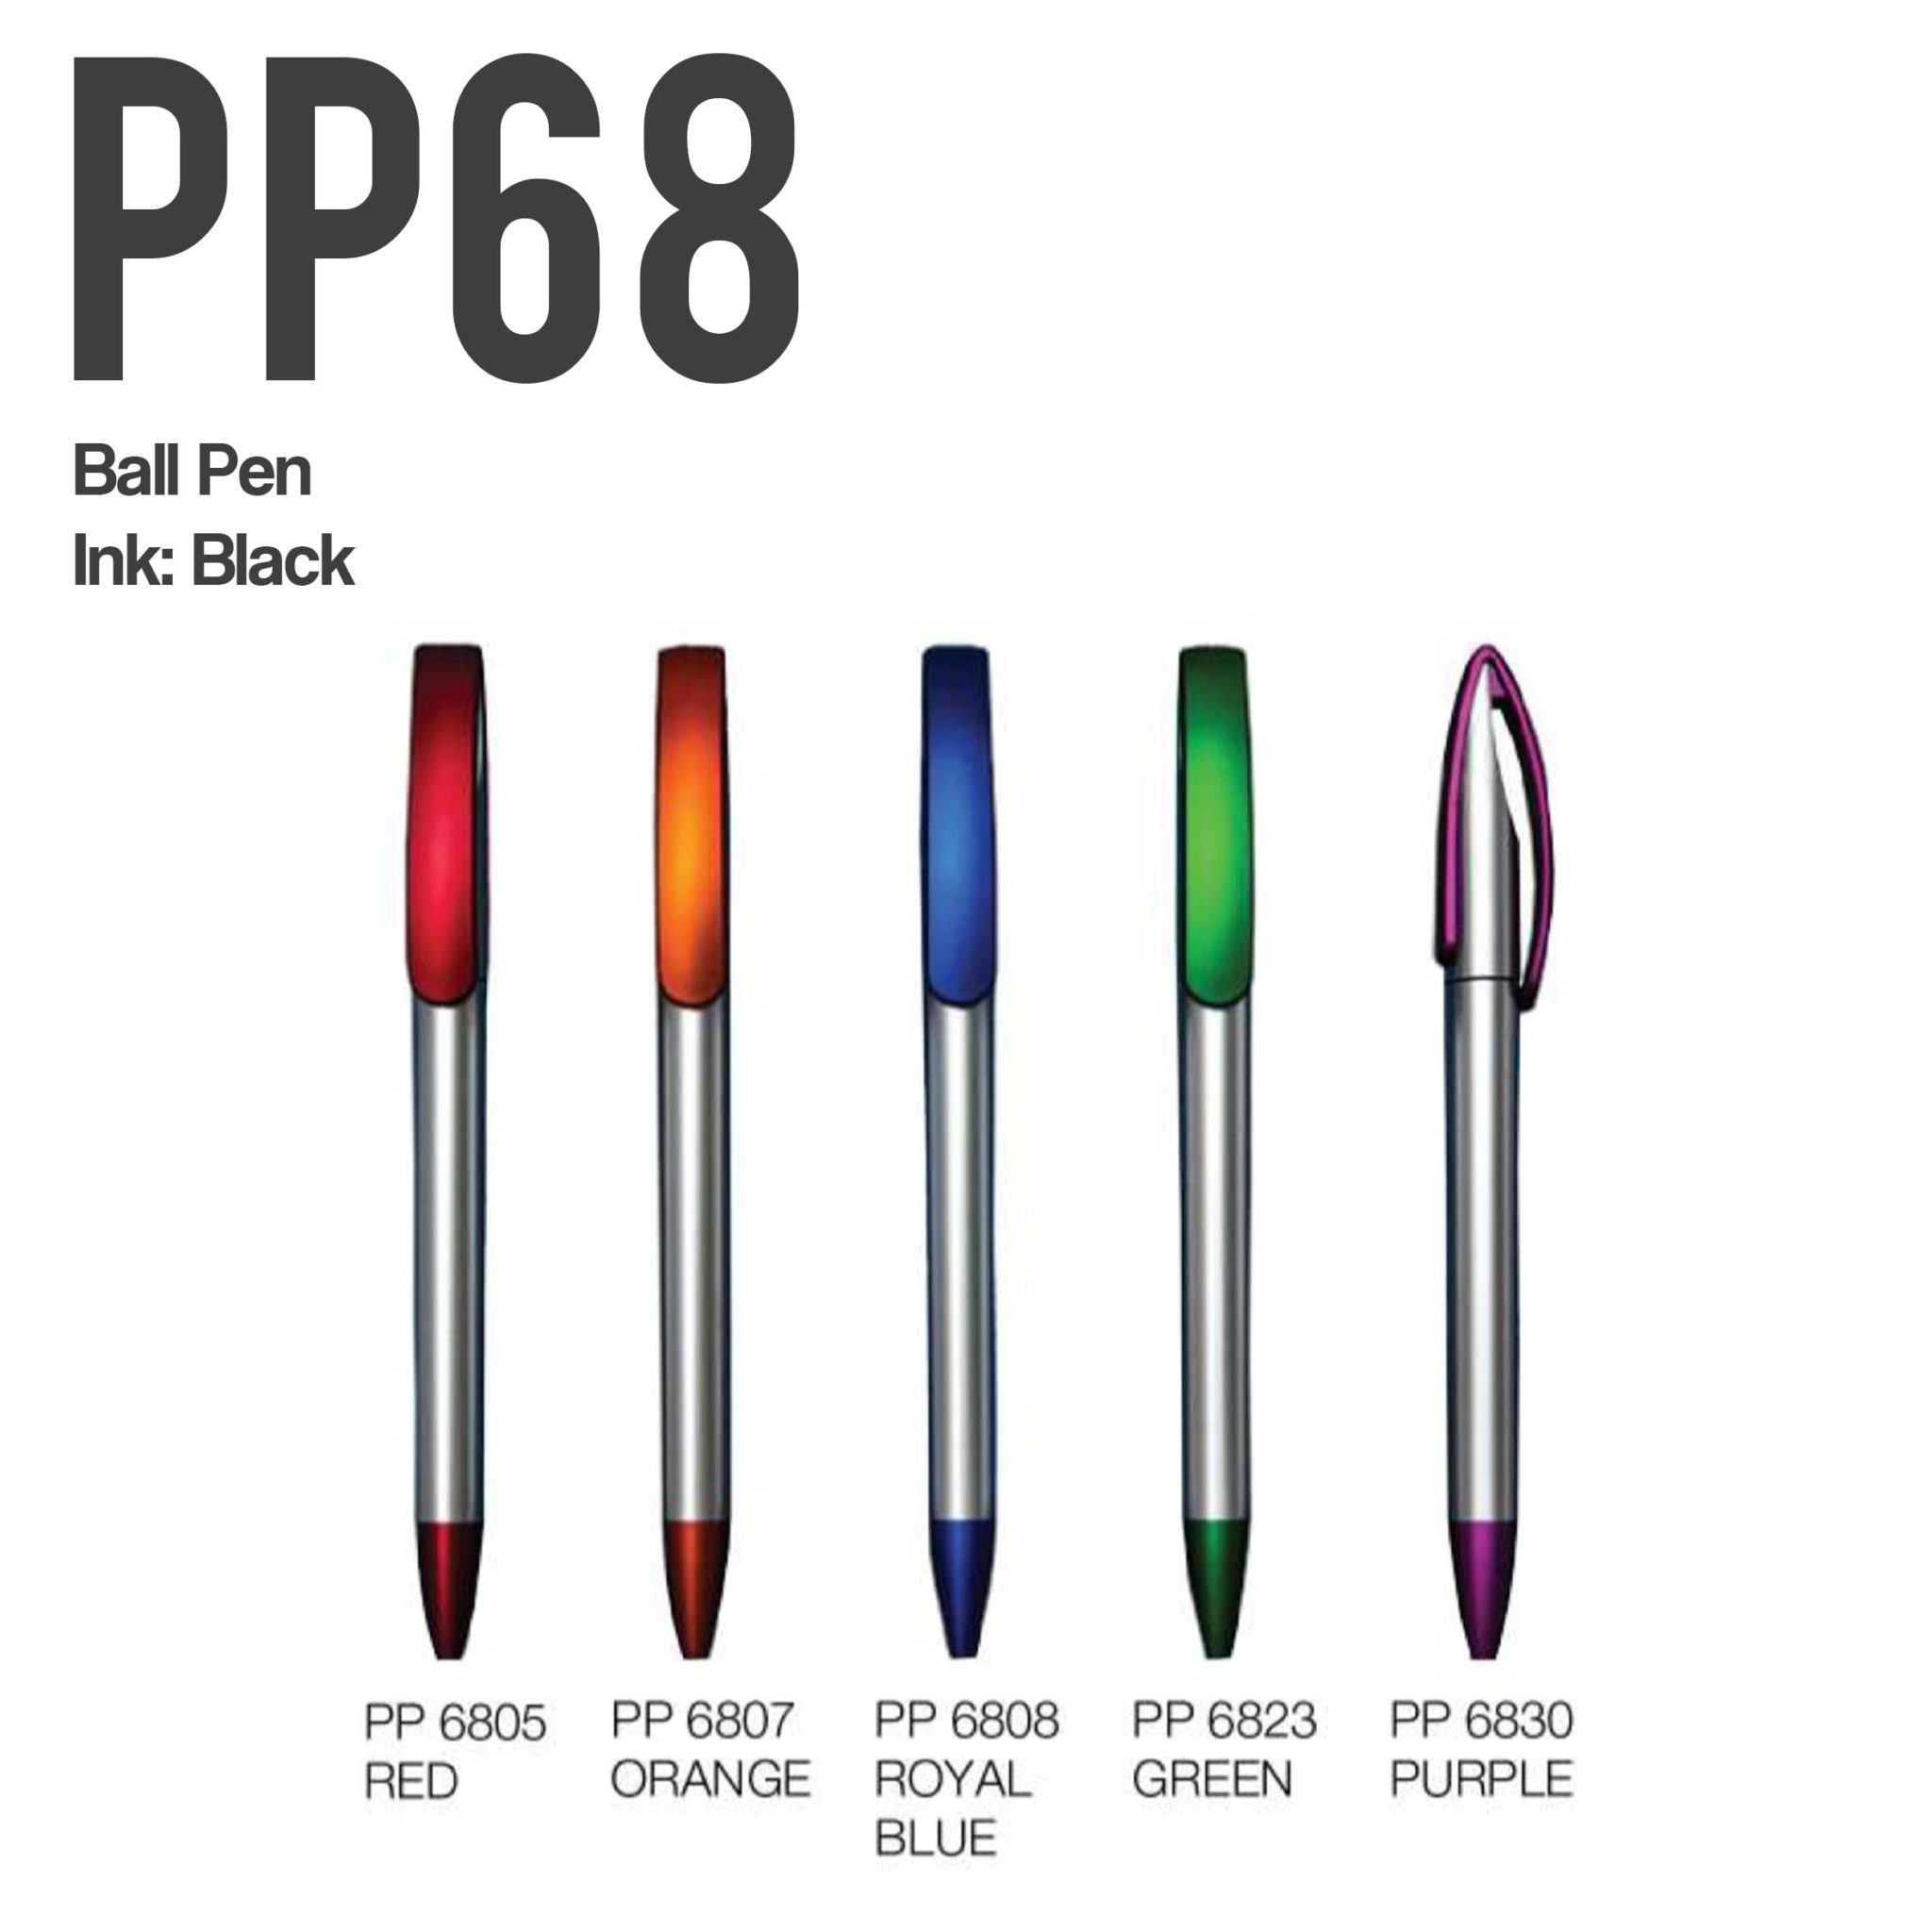 Pp68 plastic pen scaled